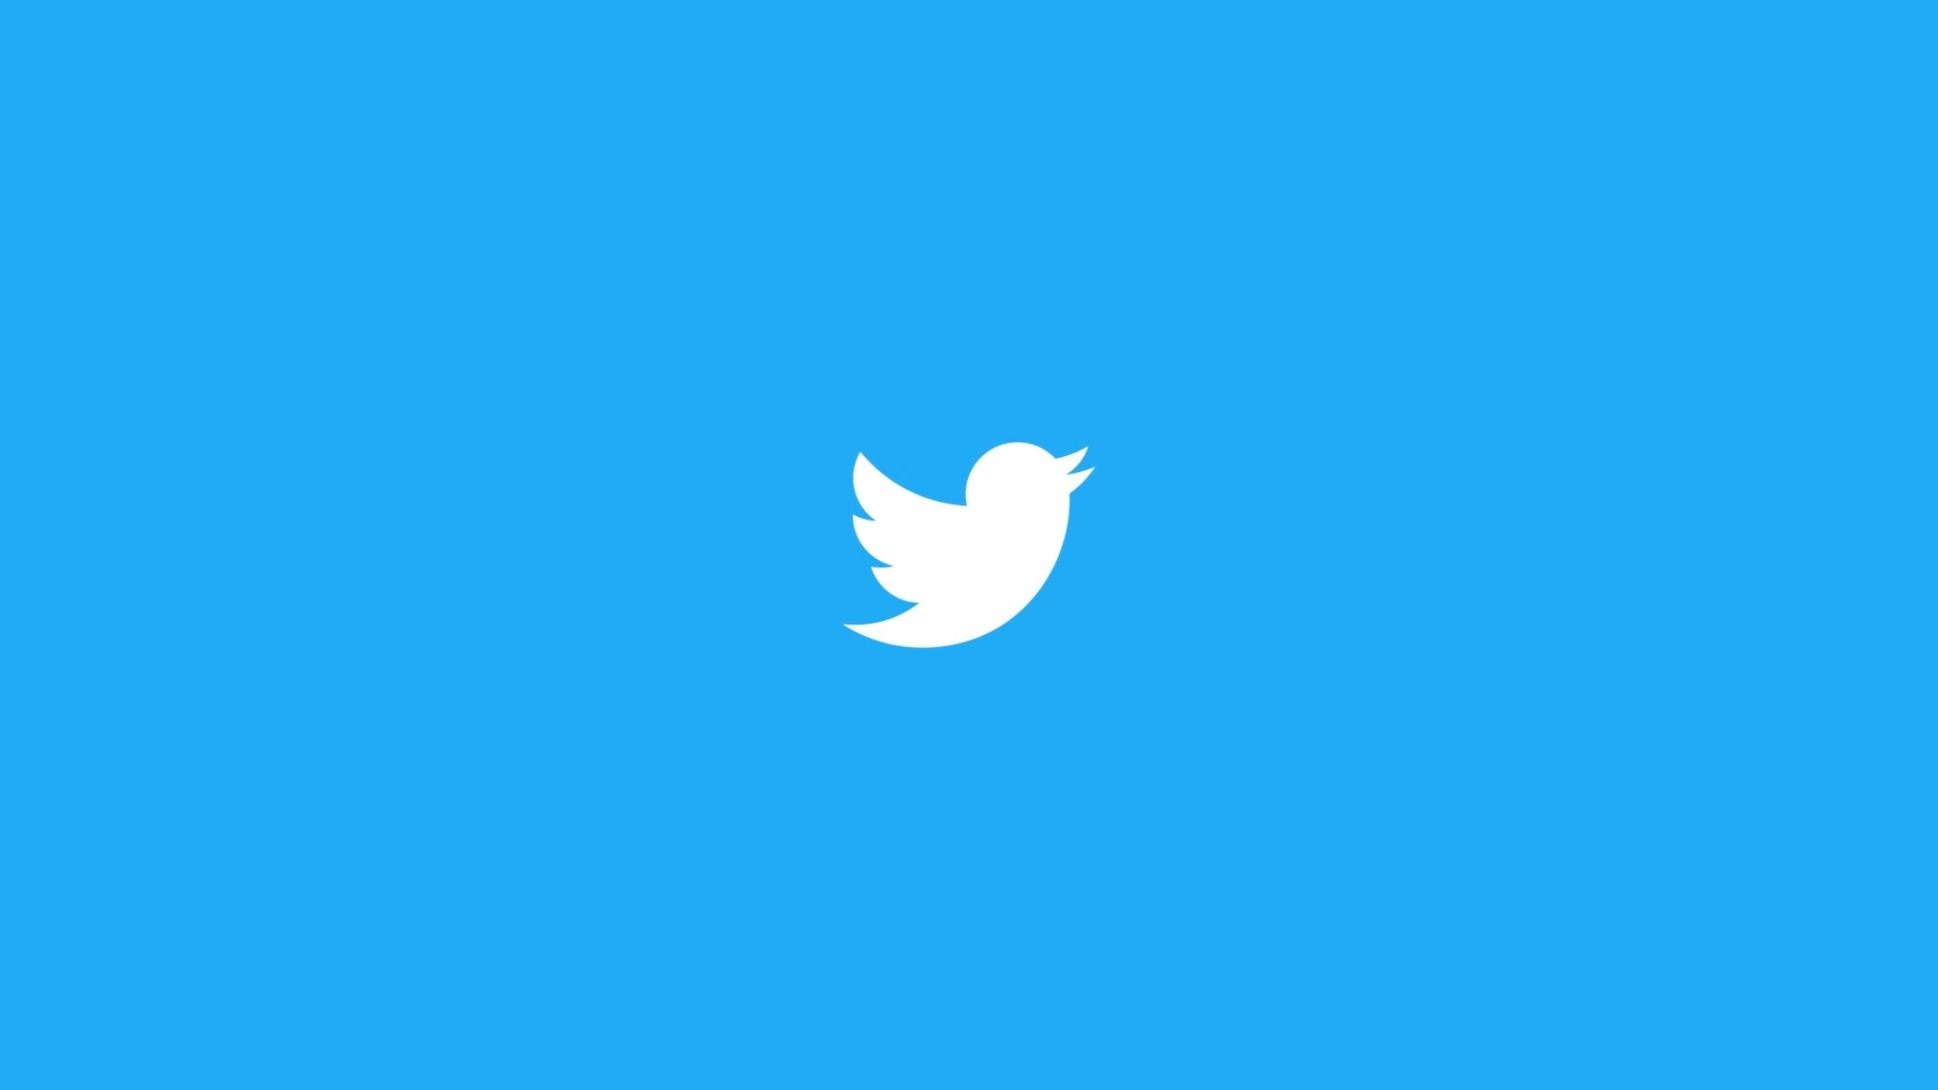 Twitter logo illustration 2